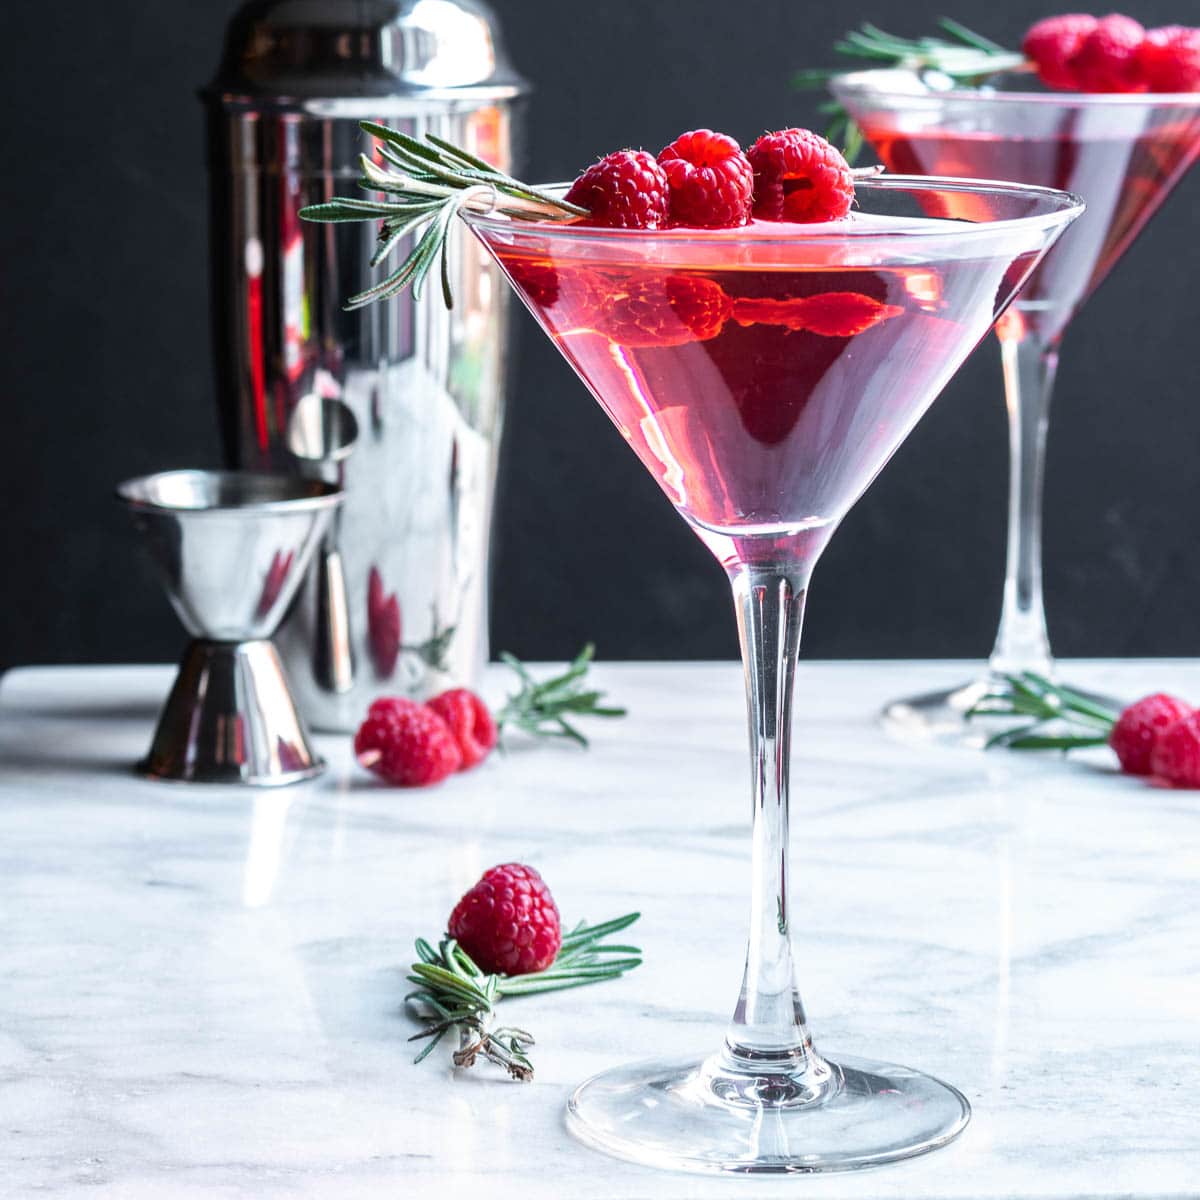 Raspberry Martini garnished with raspberries